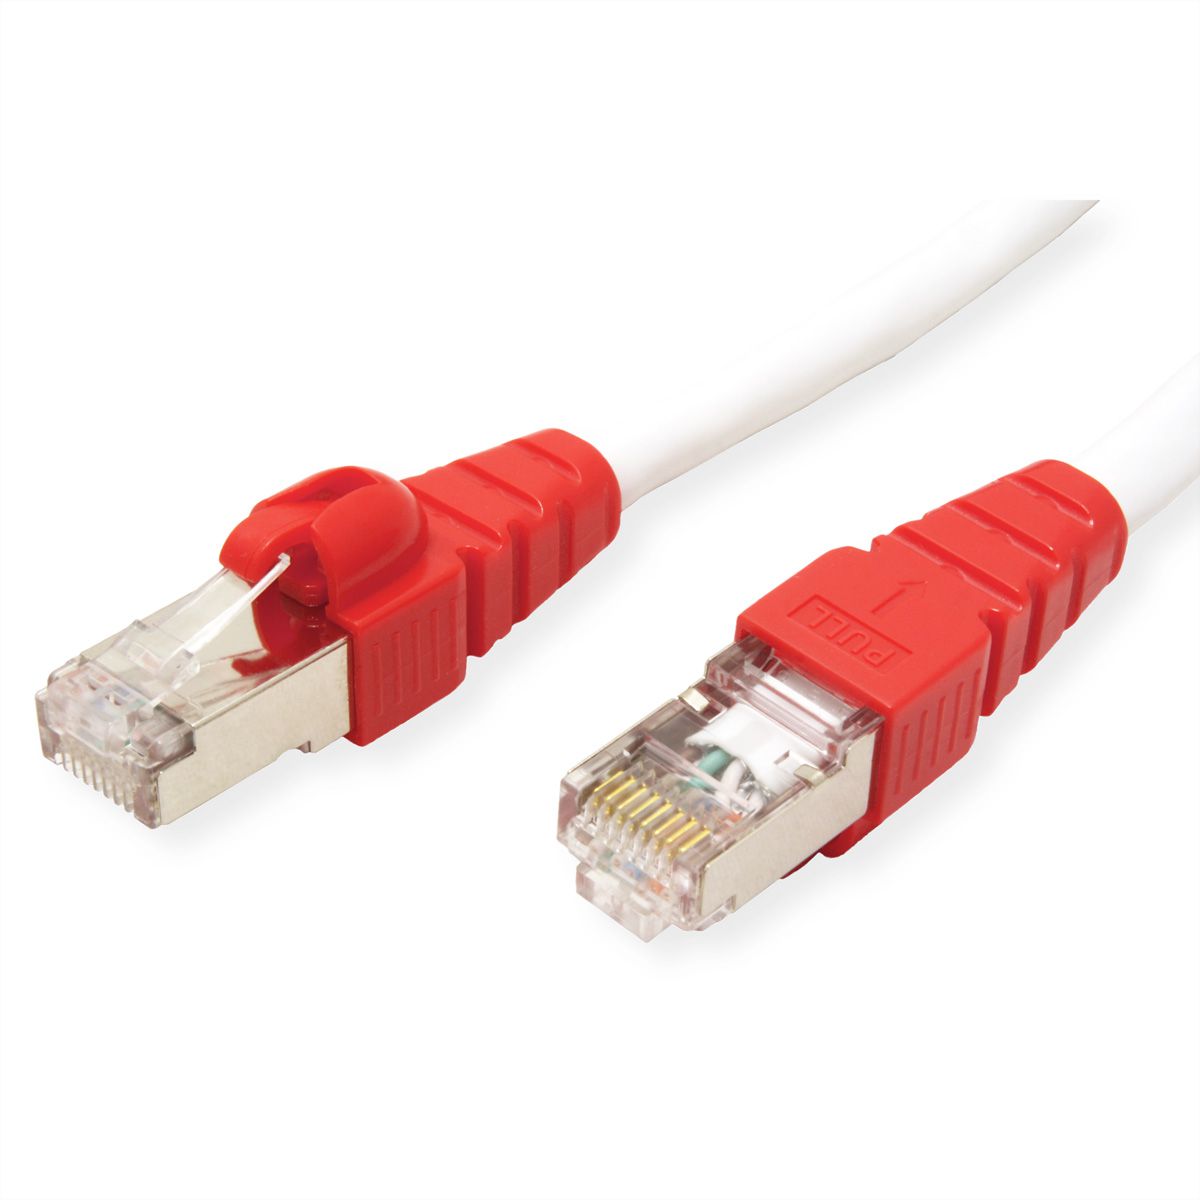 Patch Cord s/FTP 6a line cu halógenos blanco 1,5m 27awg cq3041s rj45-cable